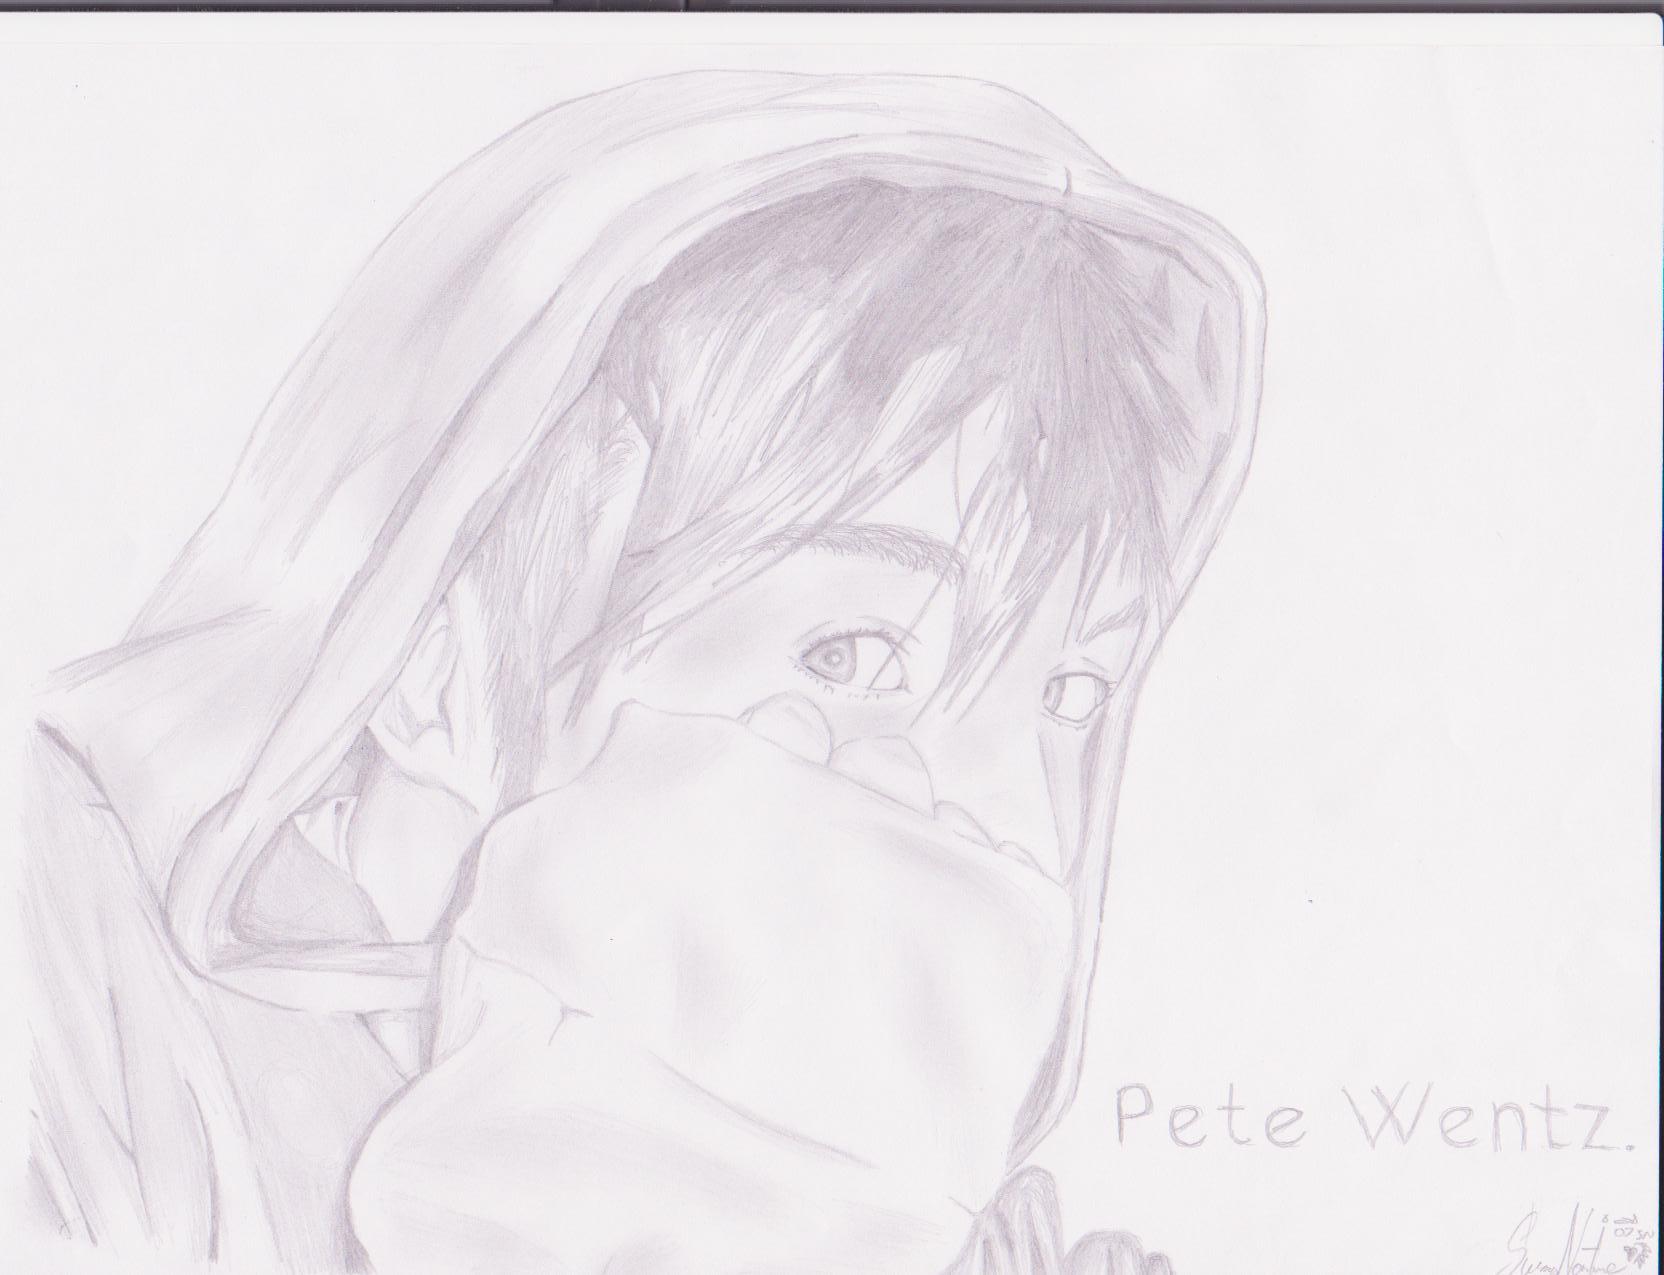 Pete Wentz by RedRoses1